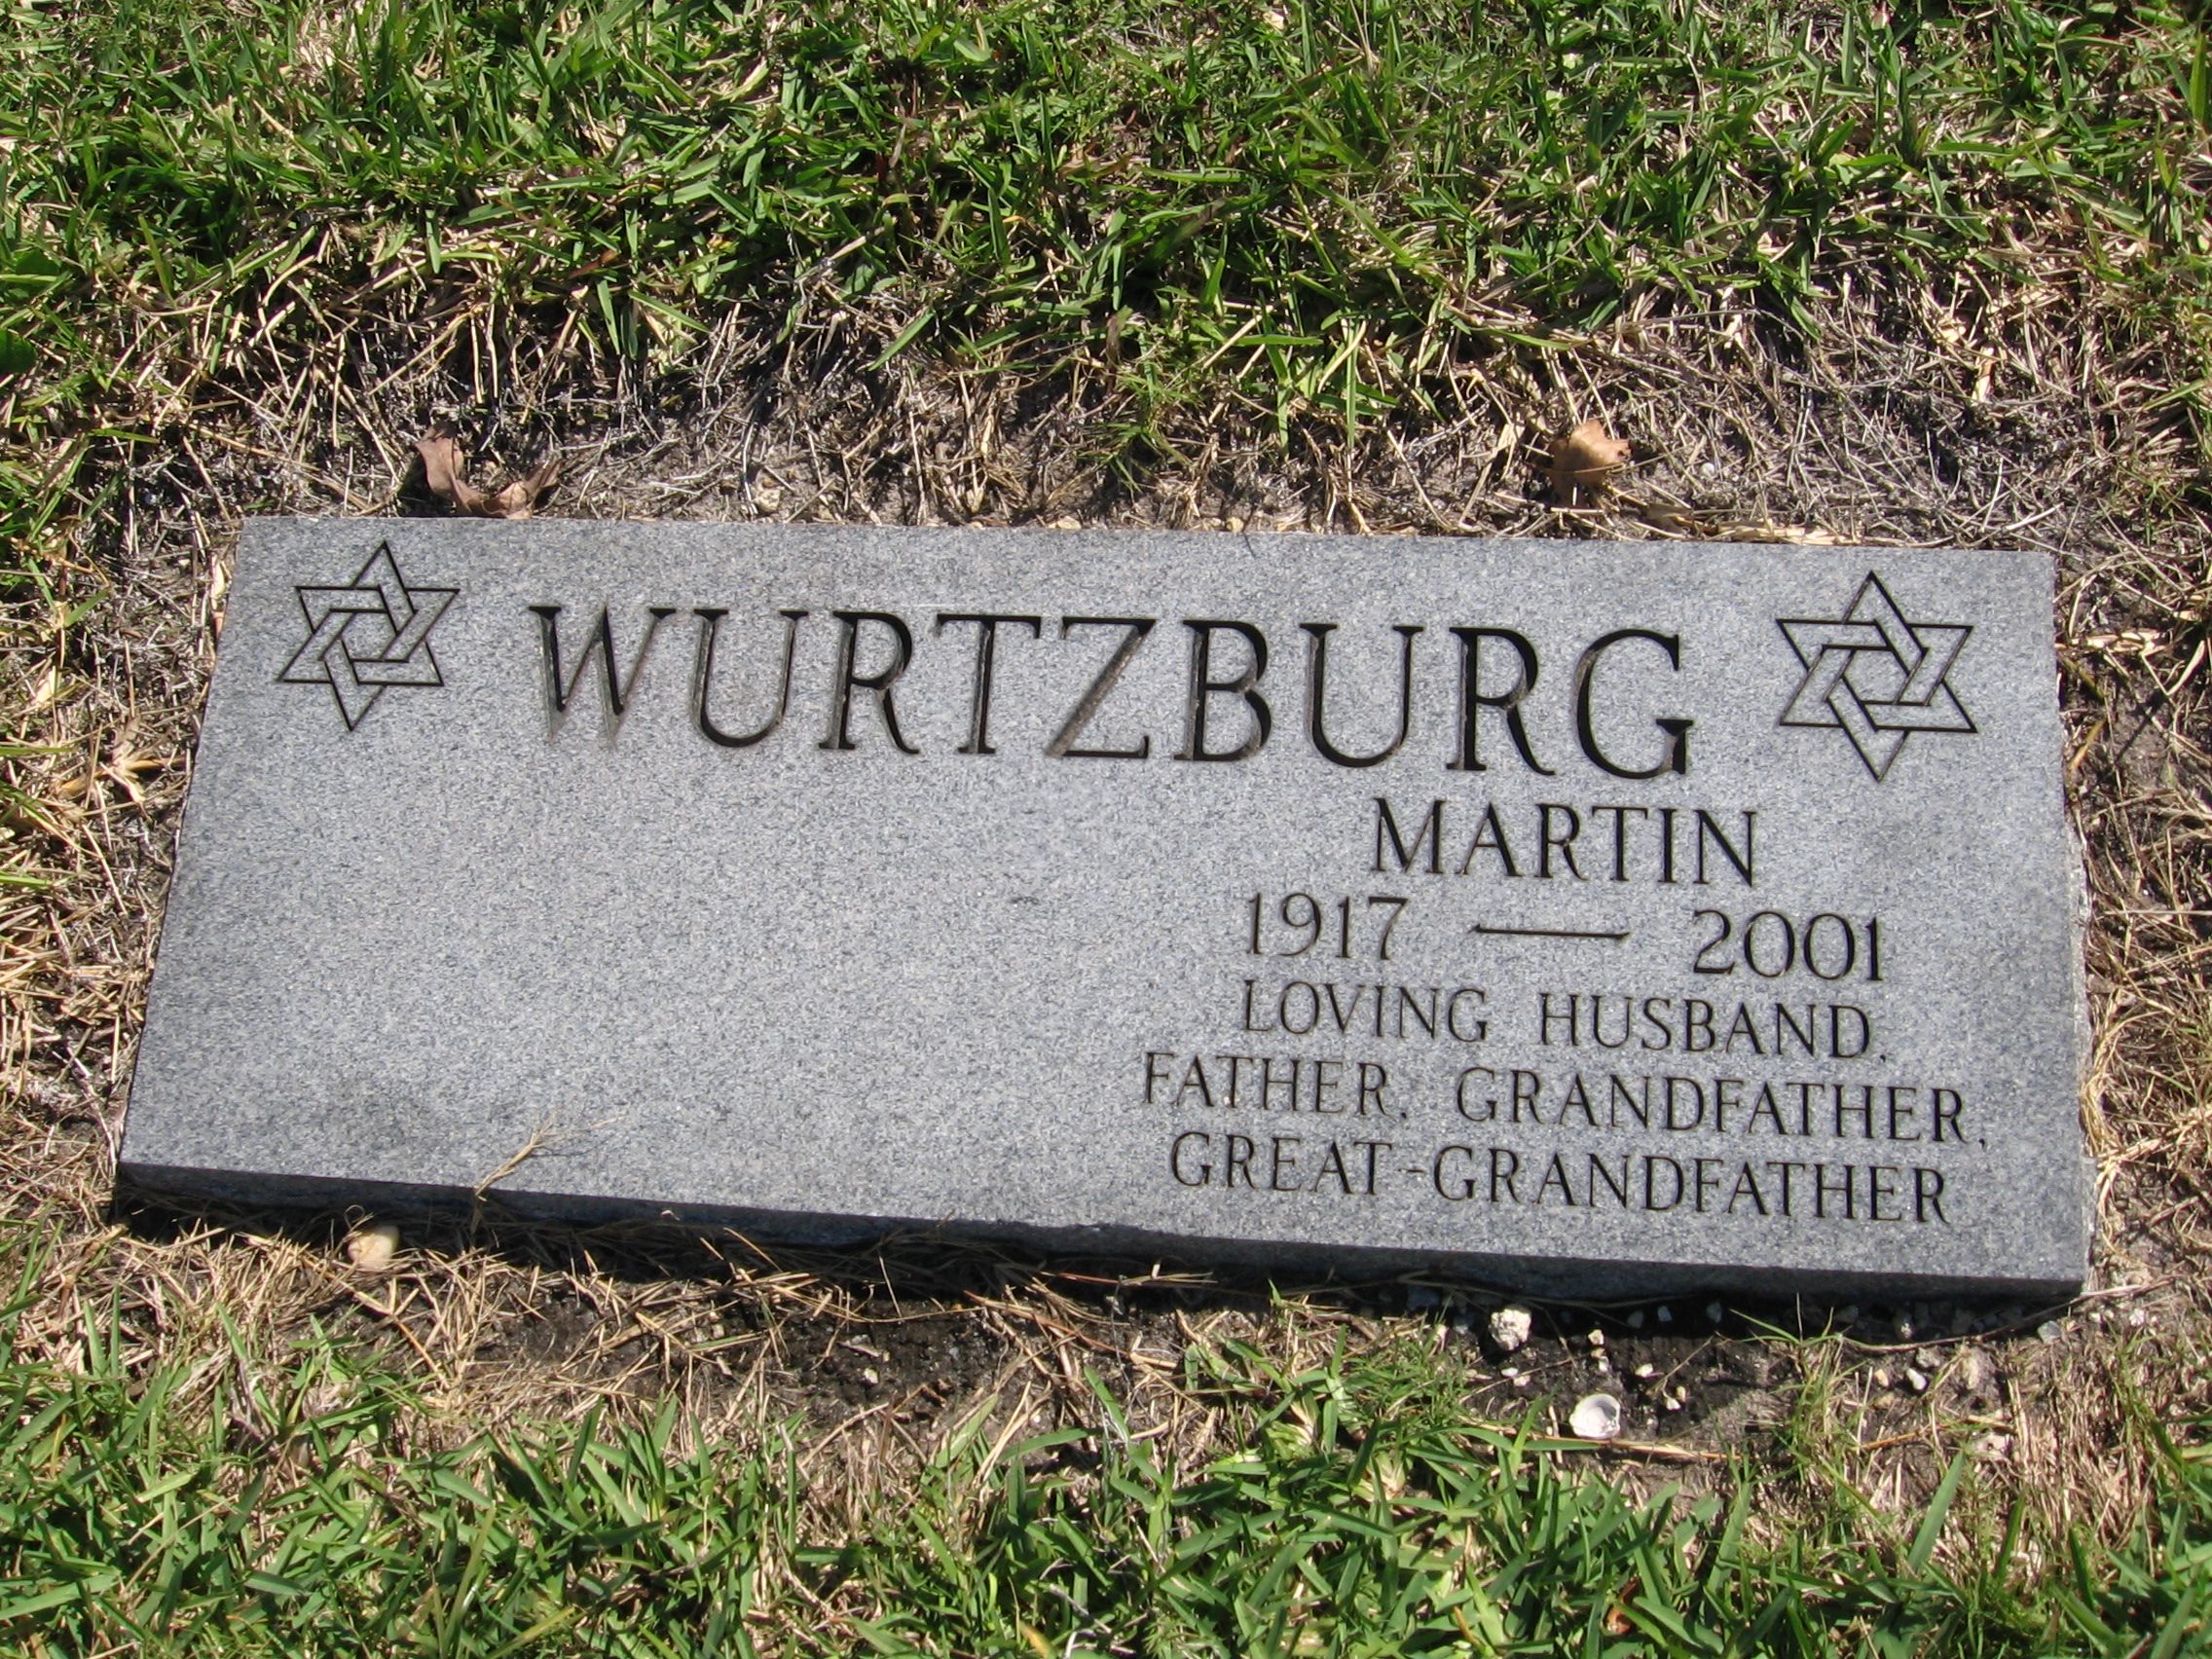 Martin Wurtzburg